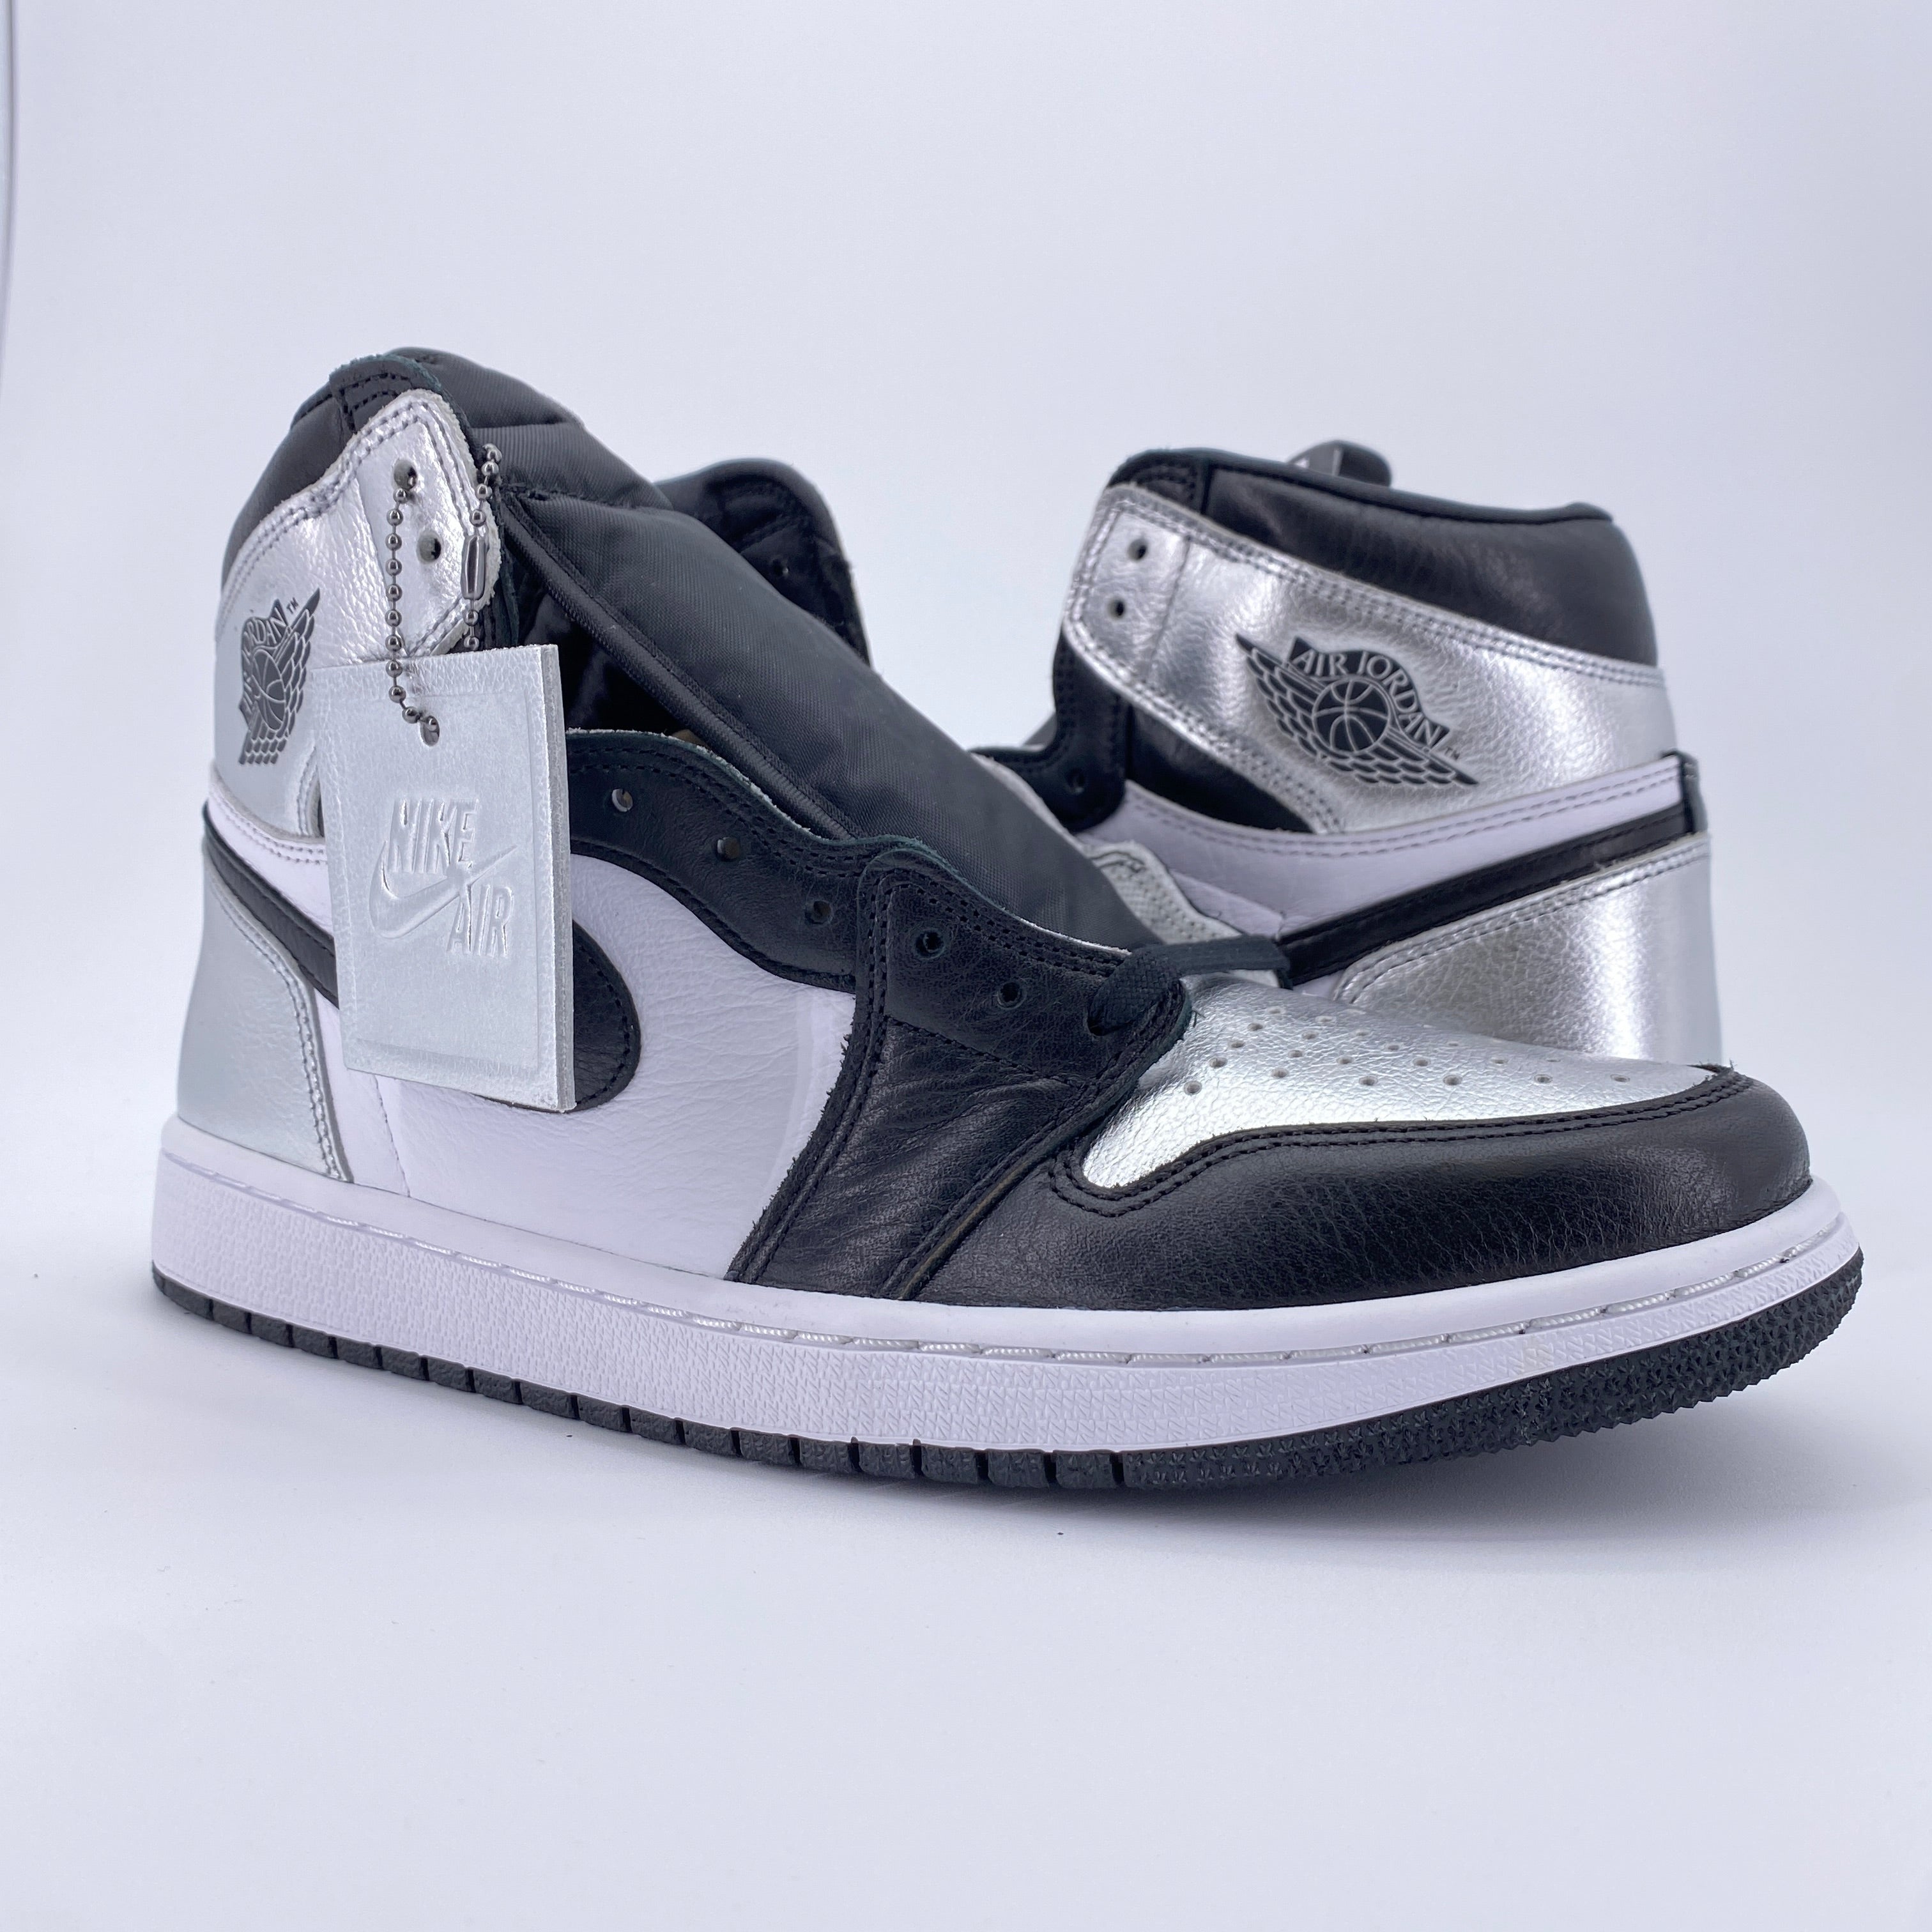 Air Jordan (W) 1 Retro High OG "Silver Toe" 2021 New Size 10.5W